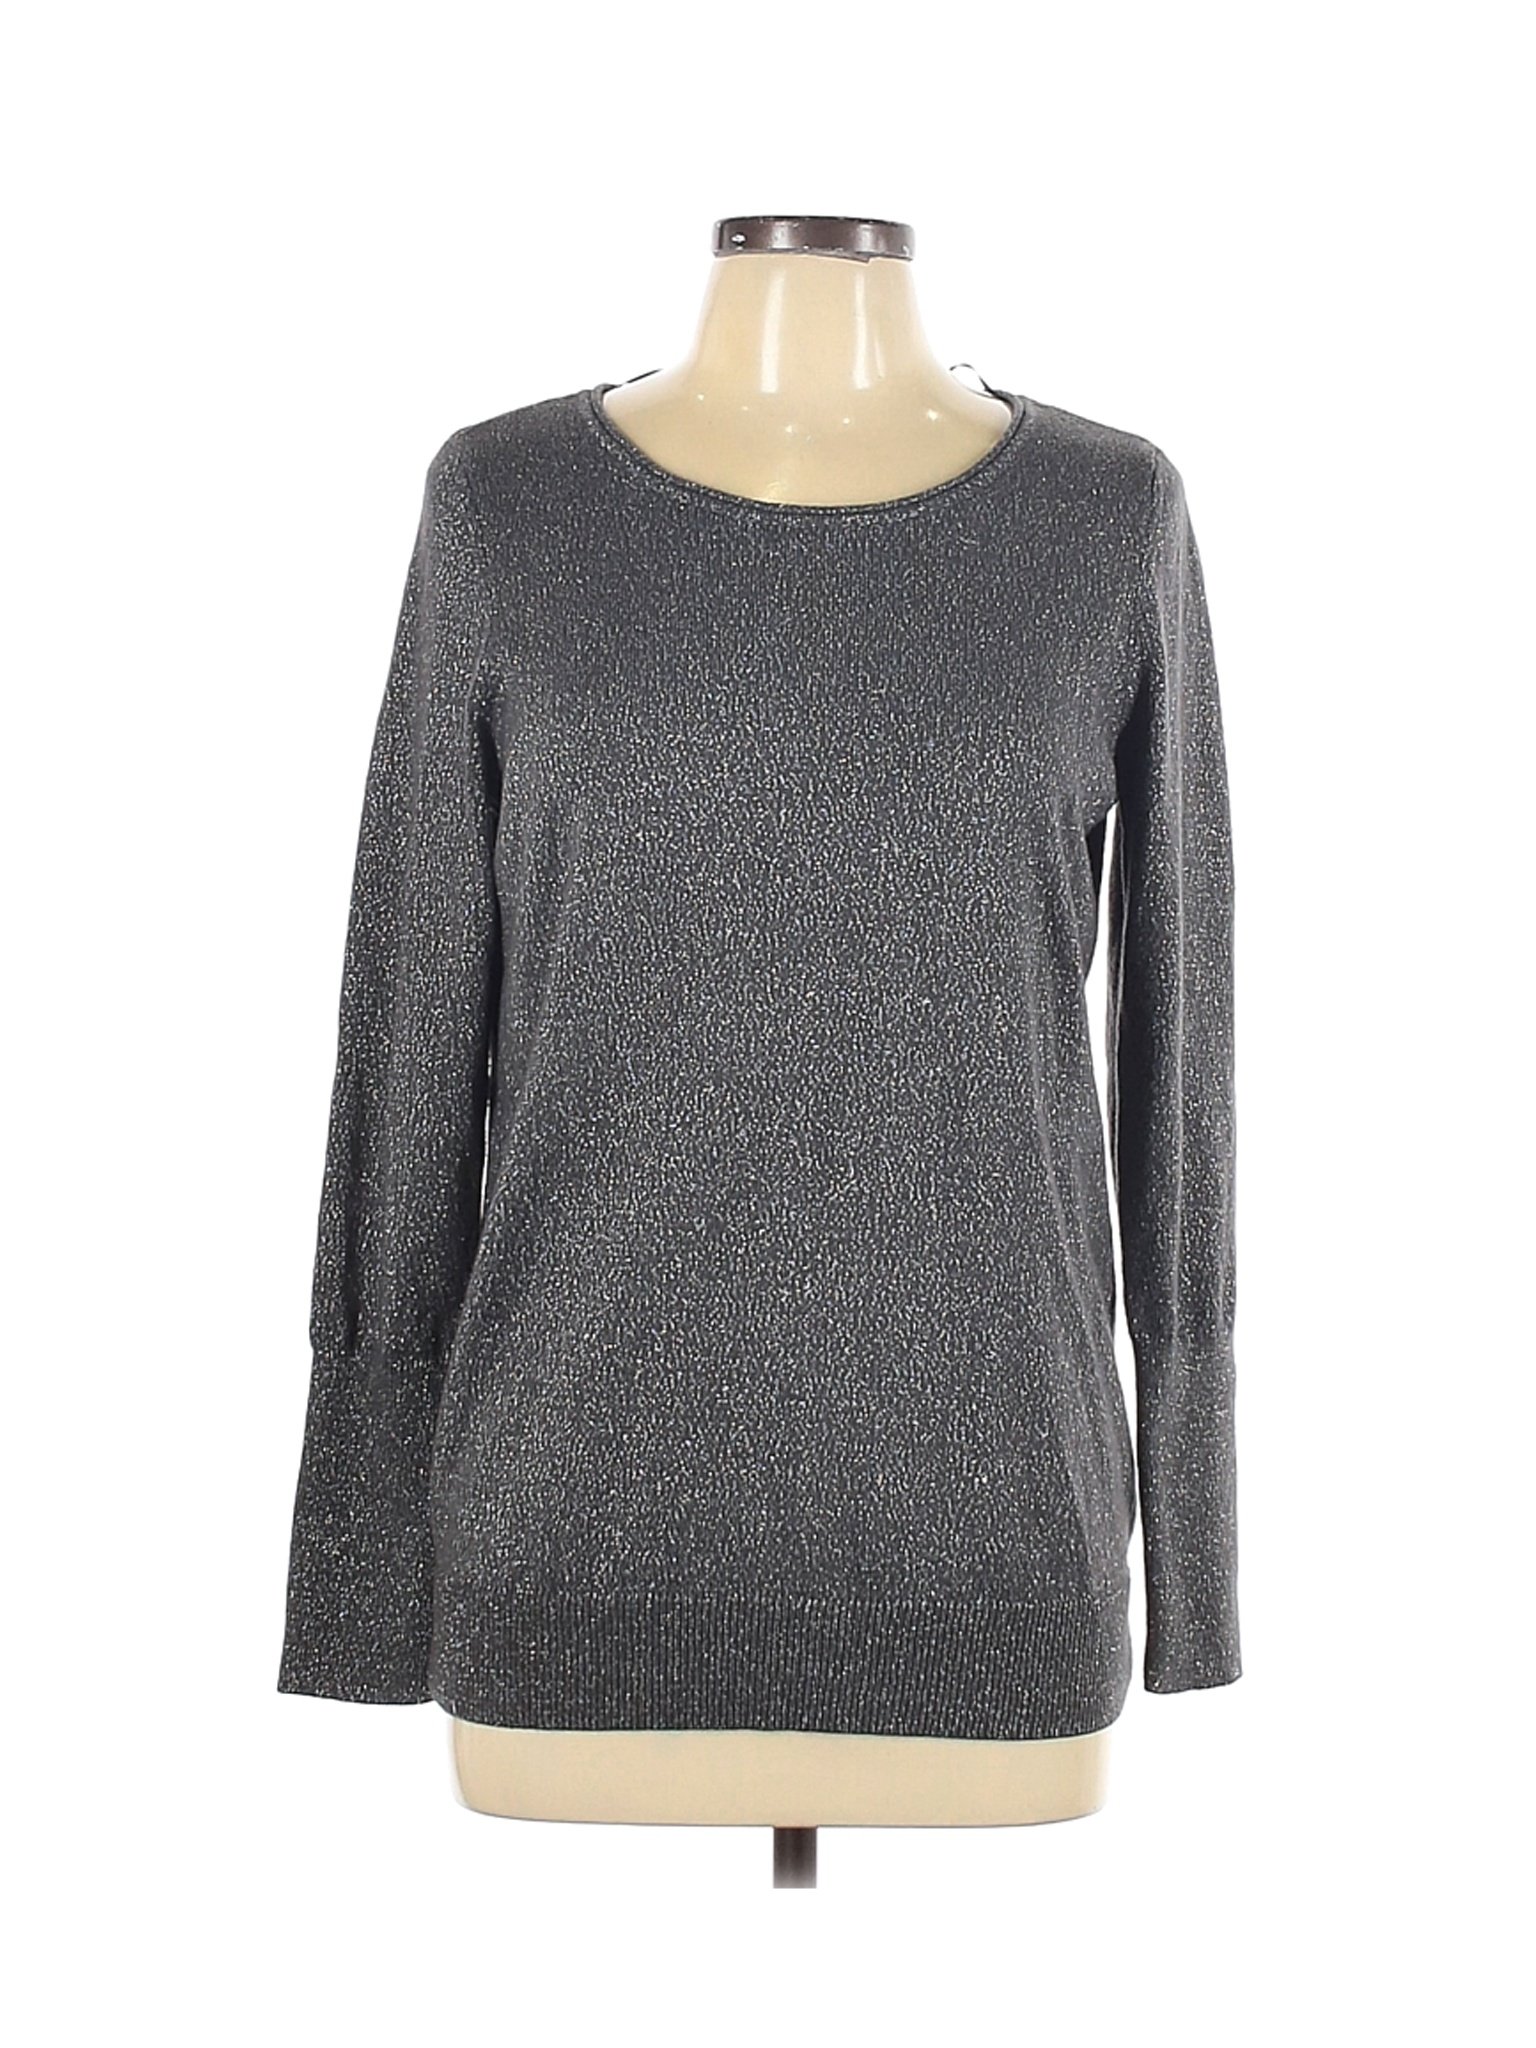 Apt. 9 Women Gray Pullover Sweater L | eBay